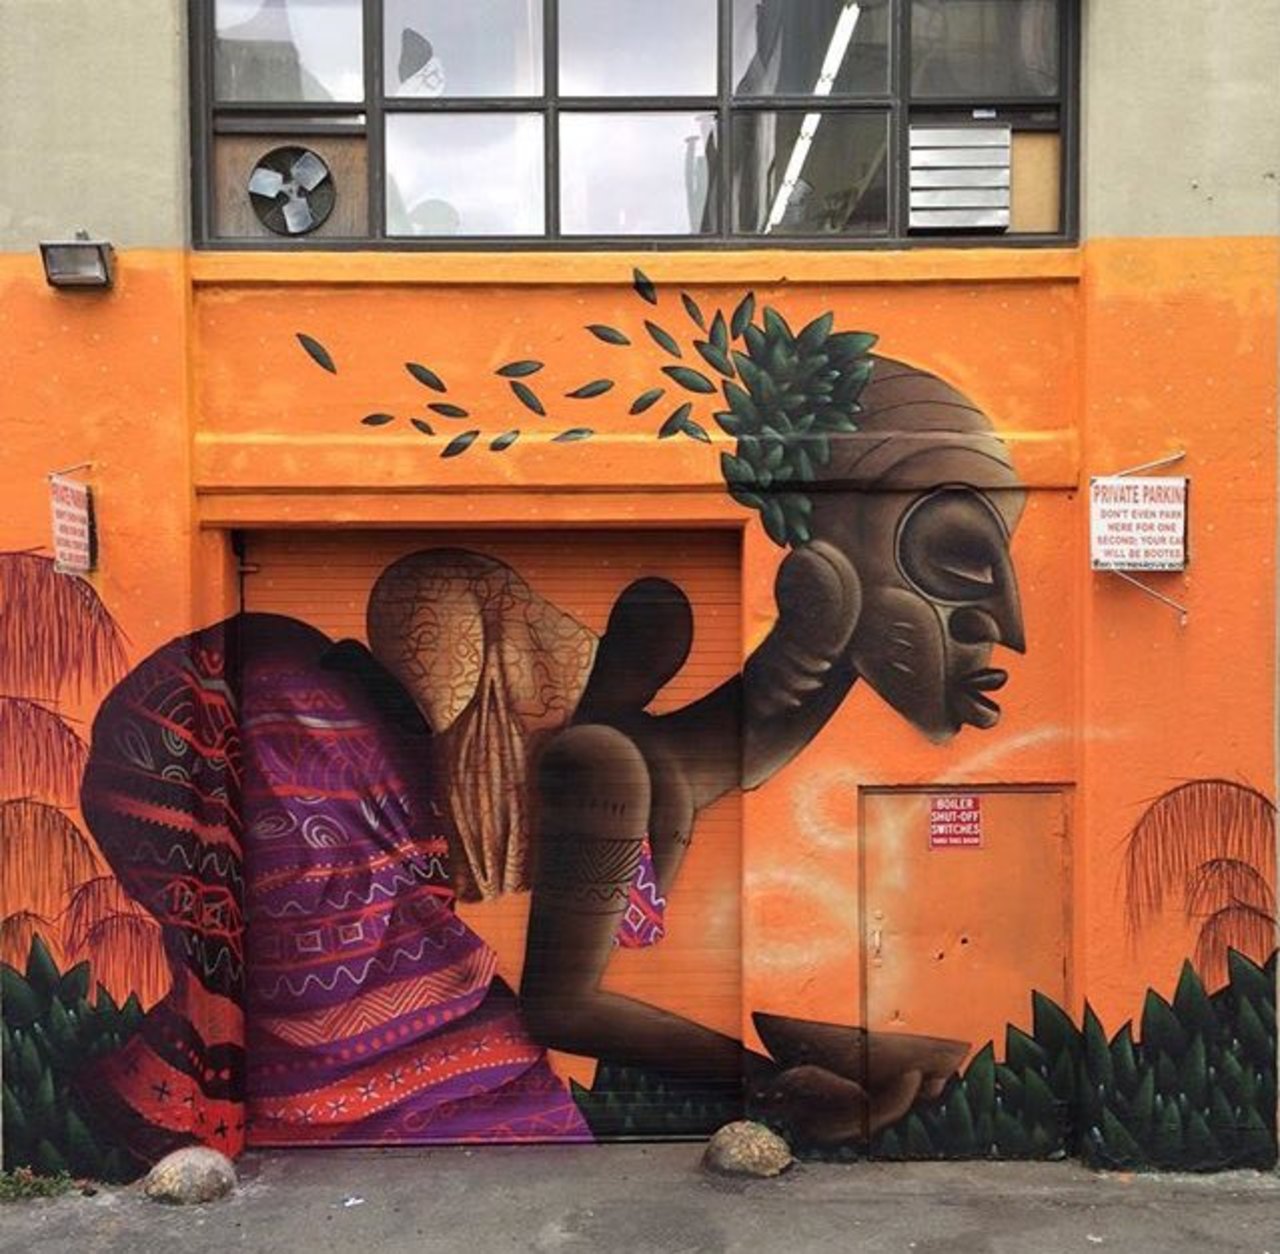 RT @noackvirginiaJ: New Street Art by Alexandre Keto in NYC 

#art #graffiti #mural #streetart https://t.co/rN6NWIj40P